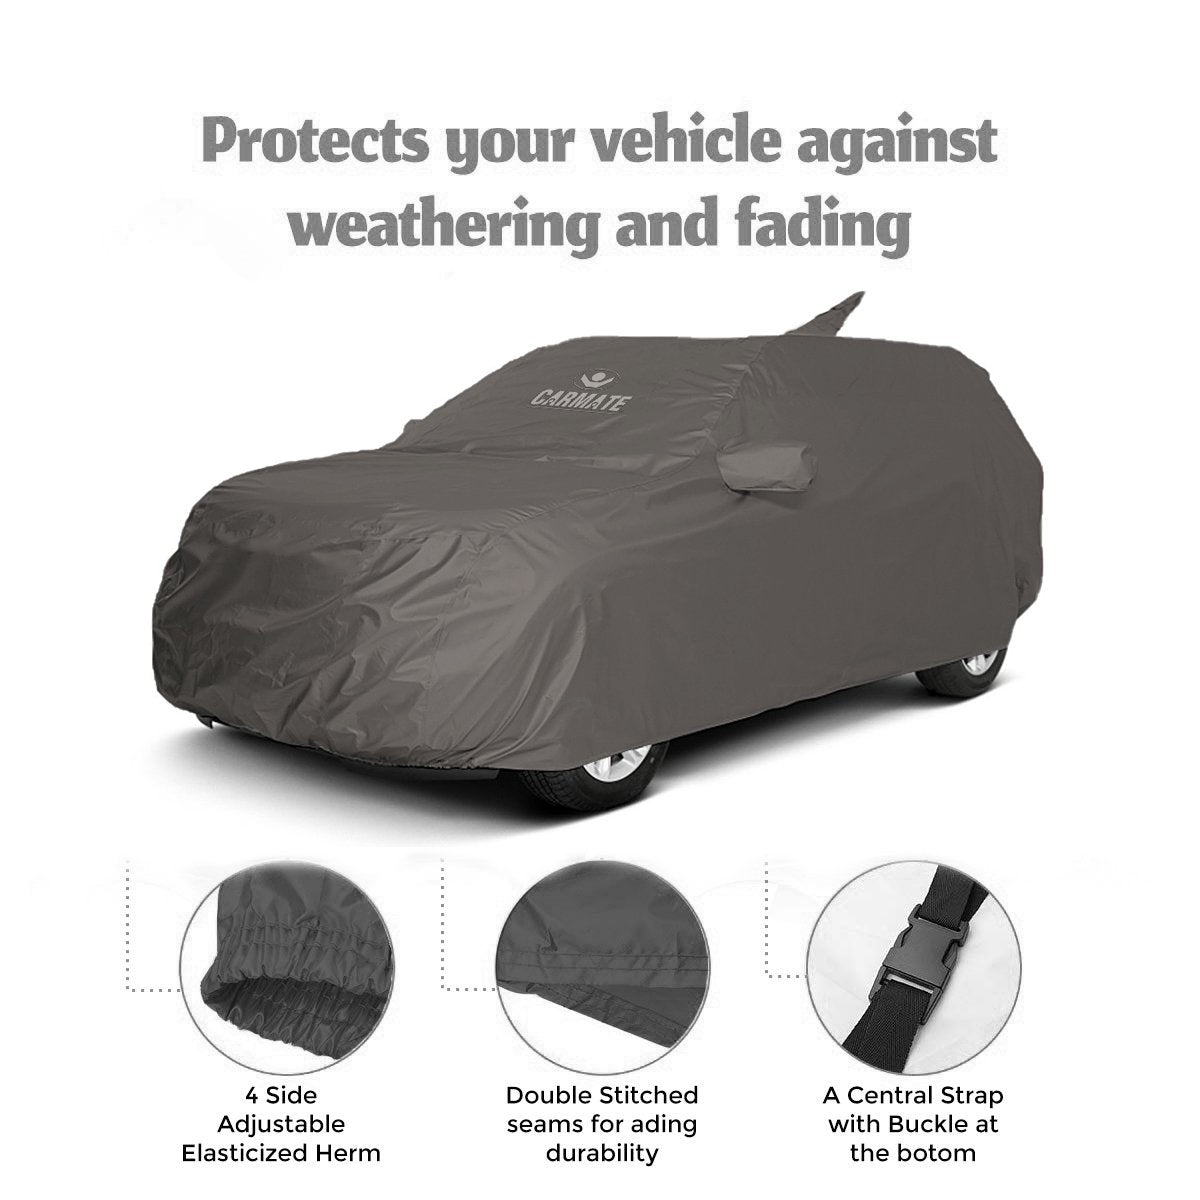 Carmate Car Body Cover 100% Waterproof Pride (Grey) for Maruti - Celerio - CARMATE®